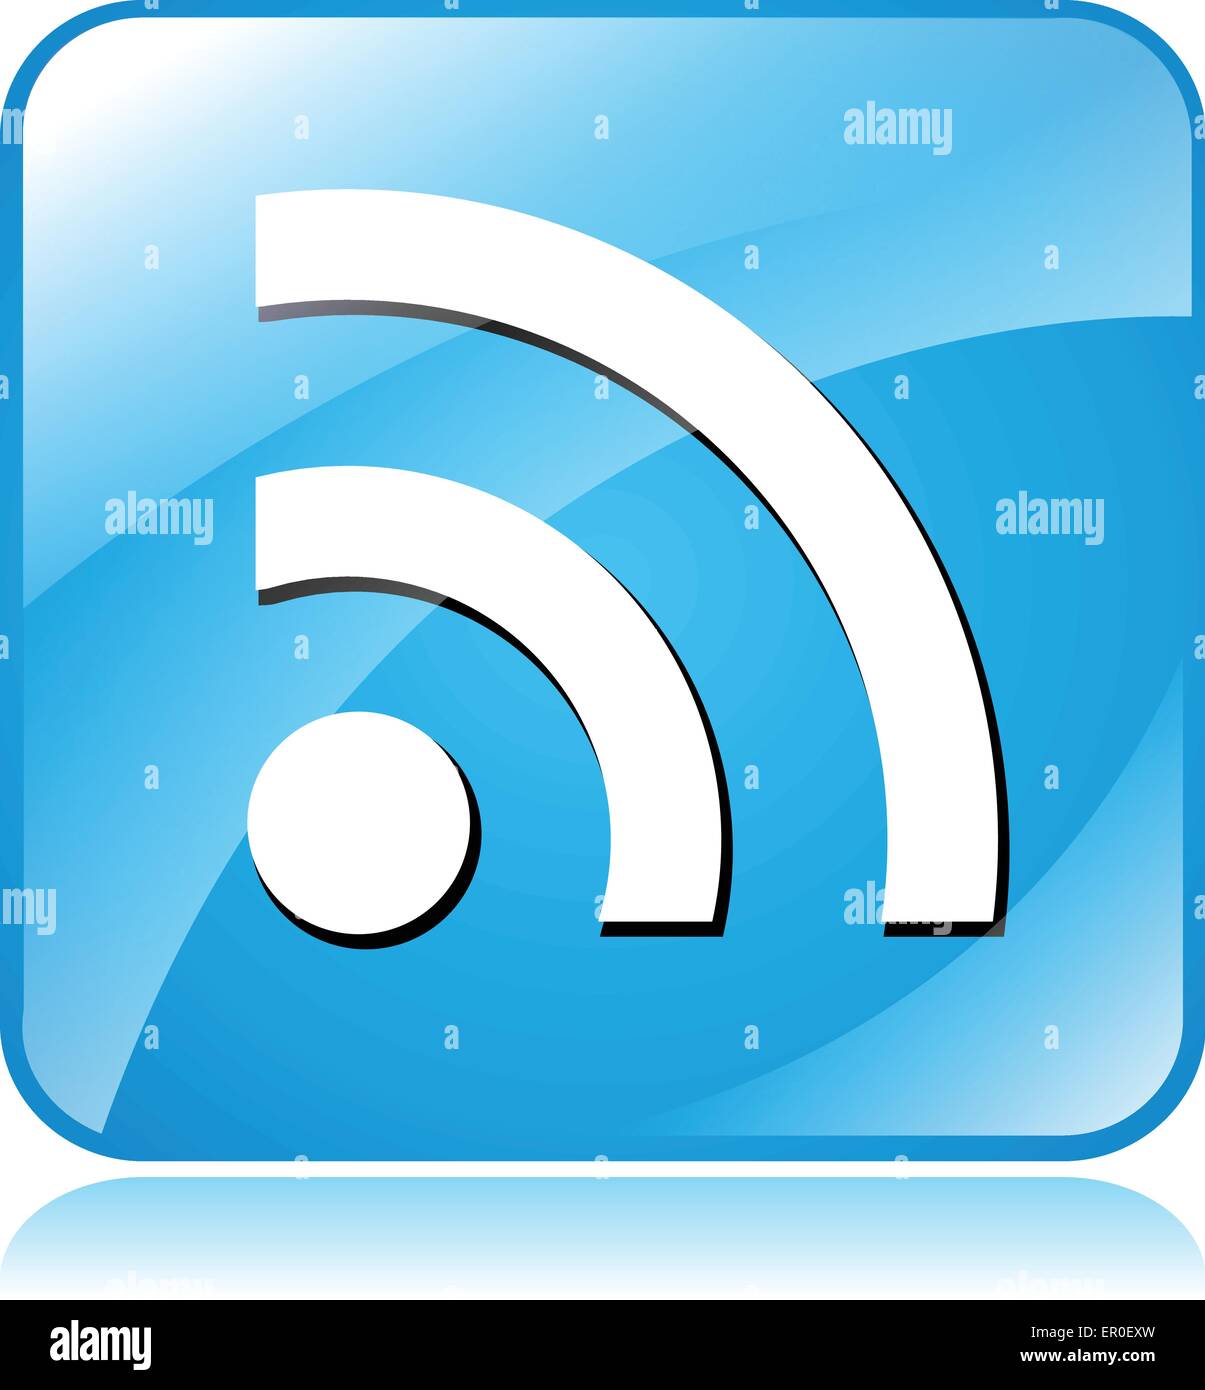 Illustration of blue square design icon for wifi Stock Vector